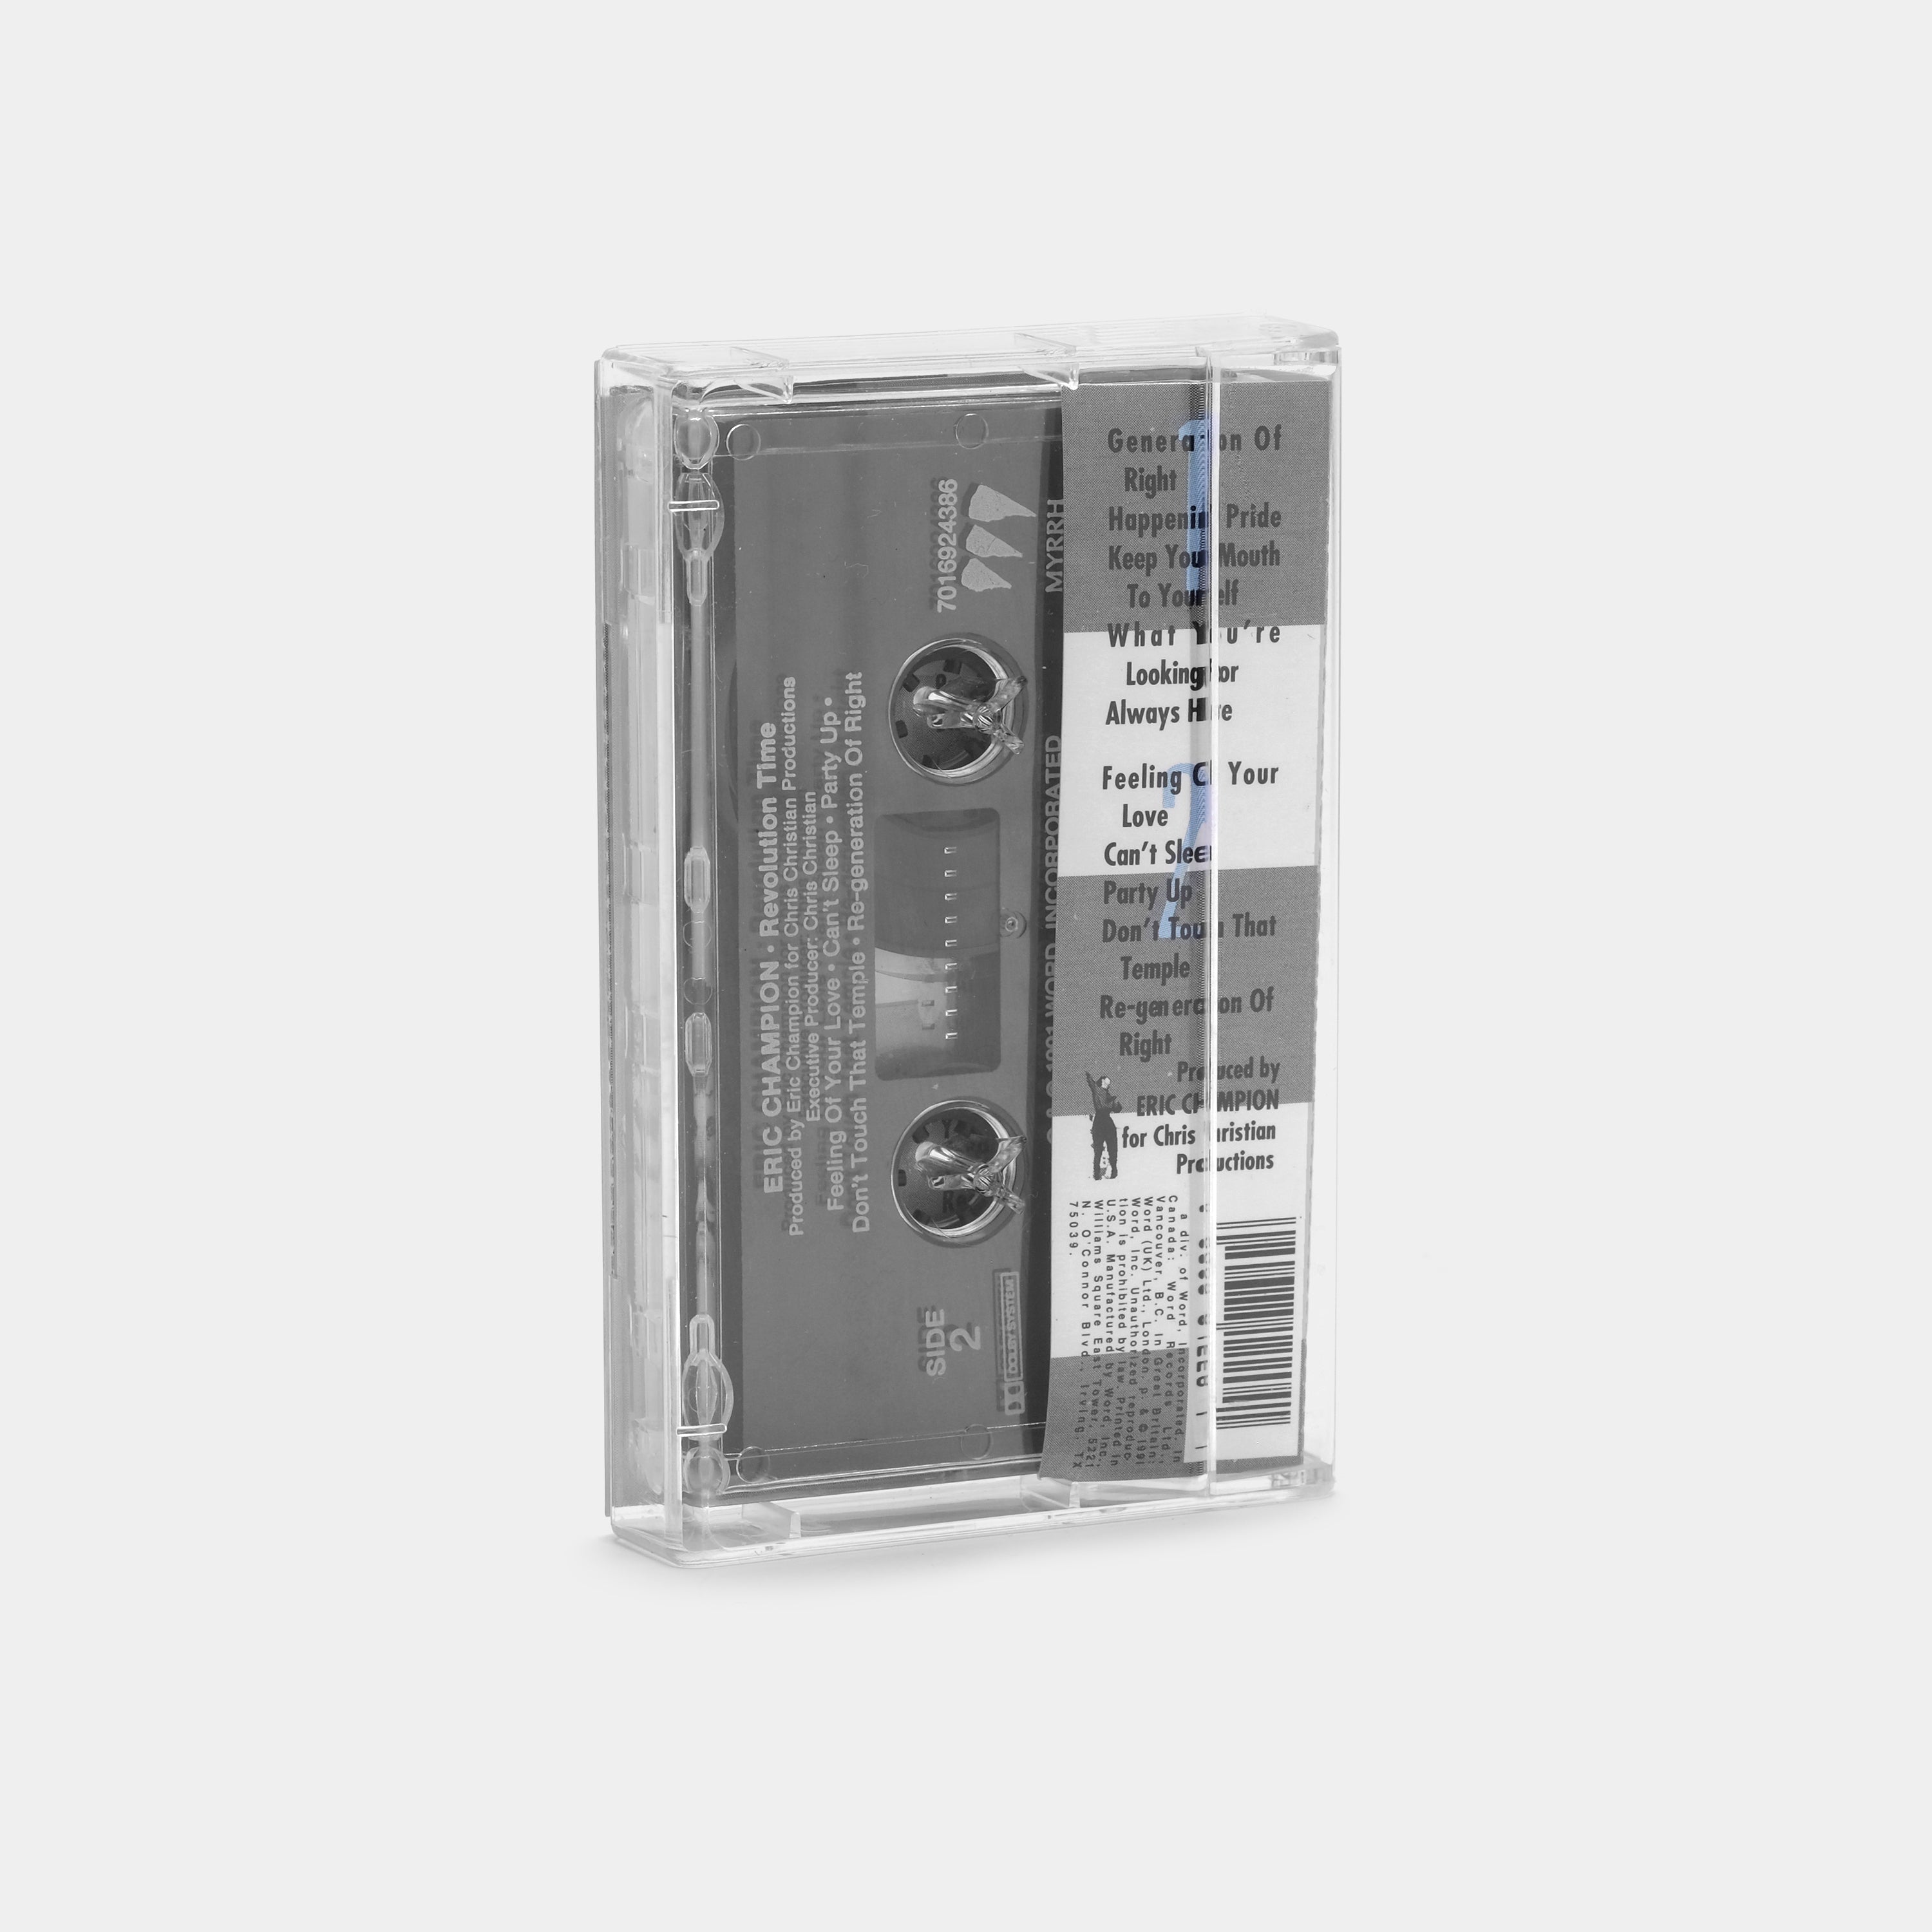 Eric Champion - Revolution Time Cassette Tape